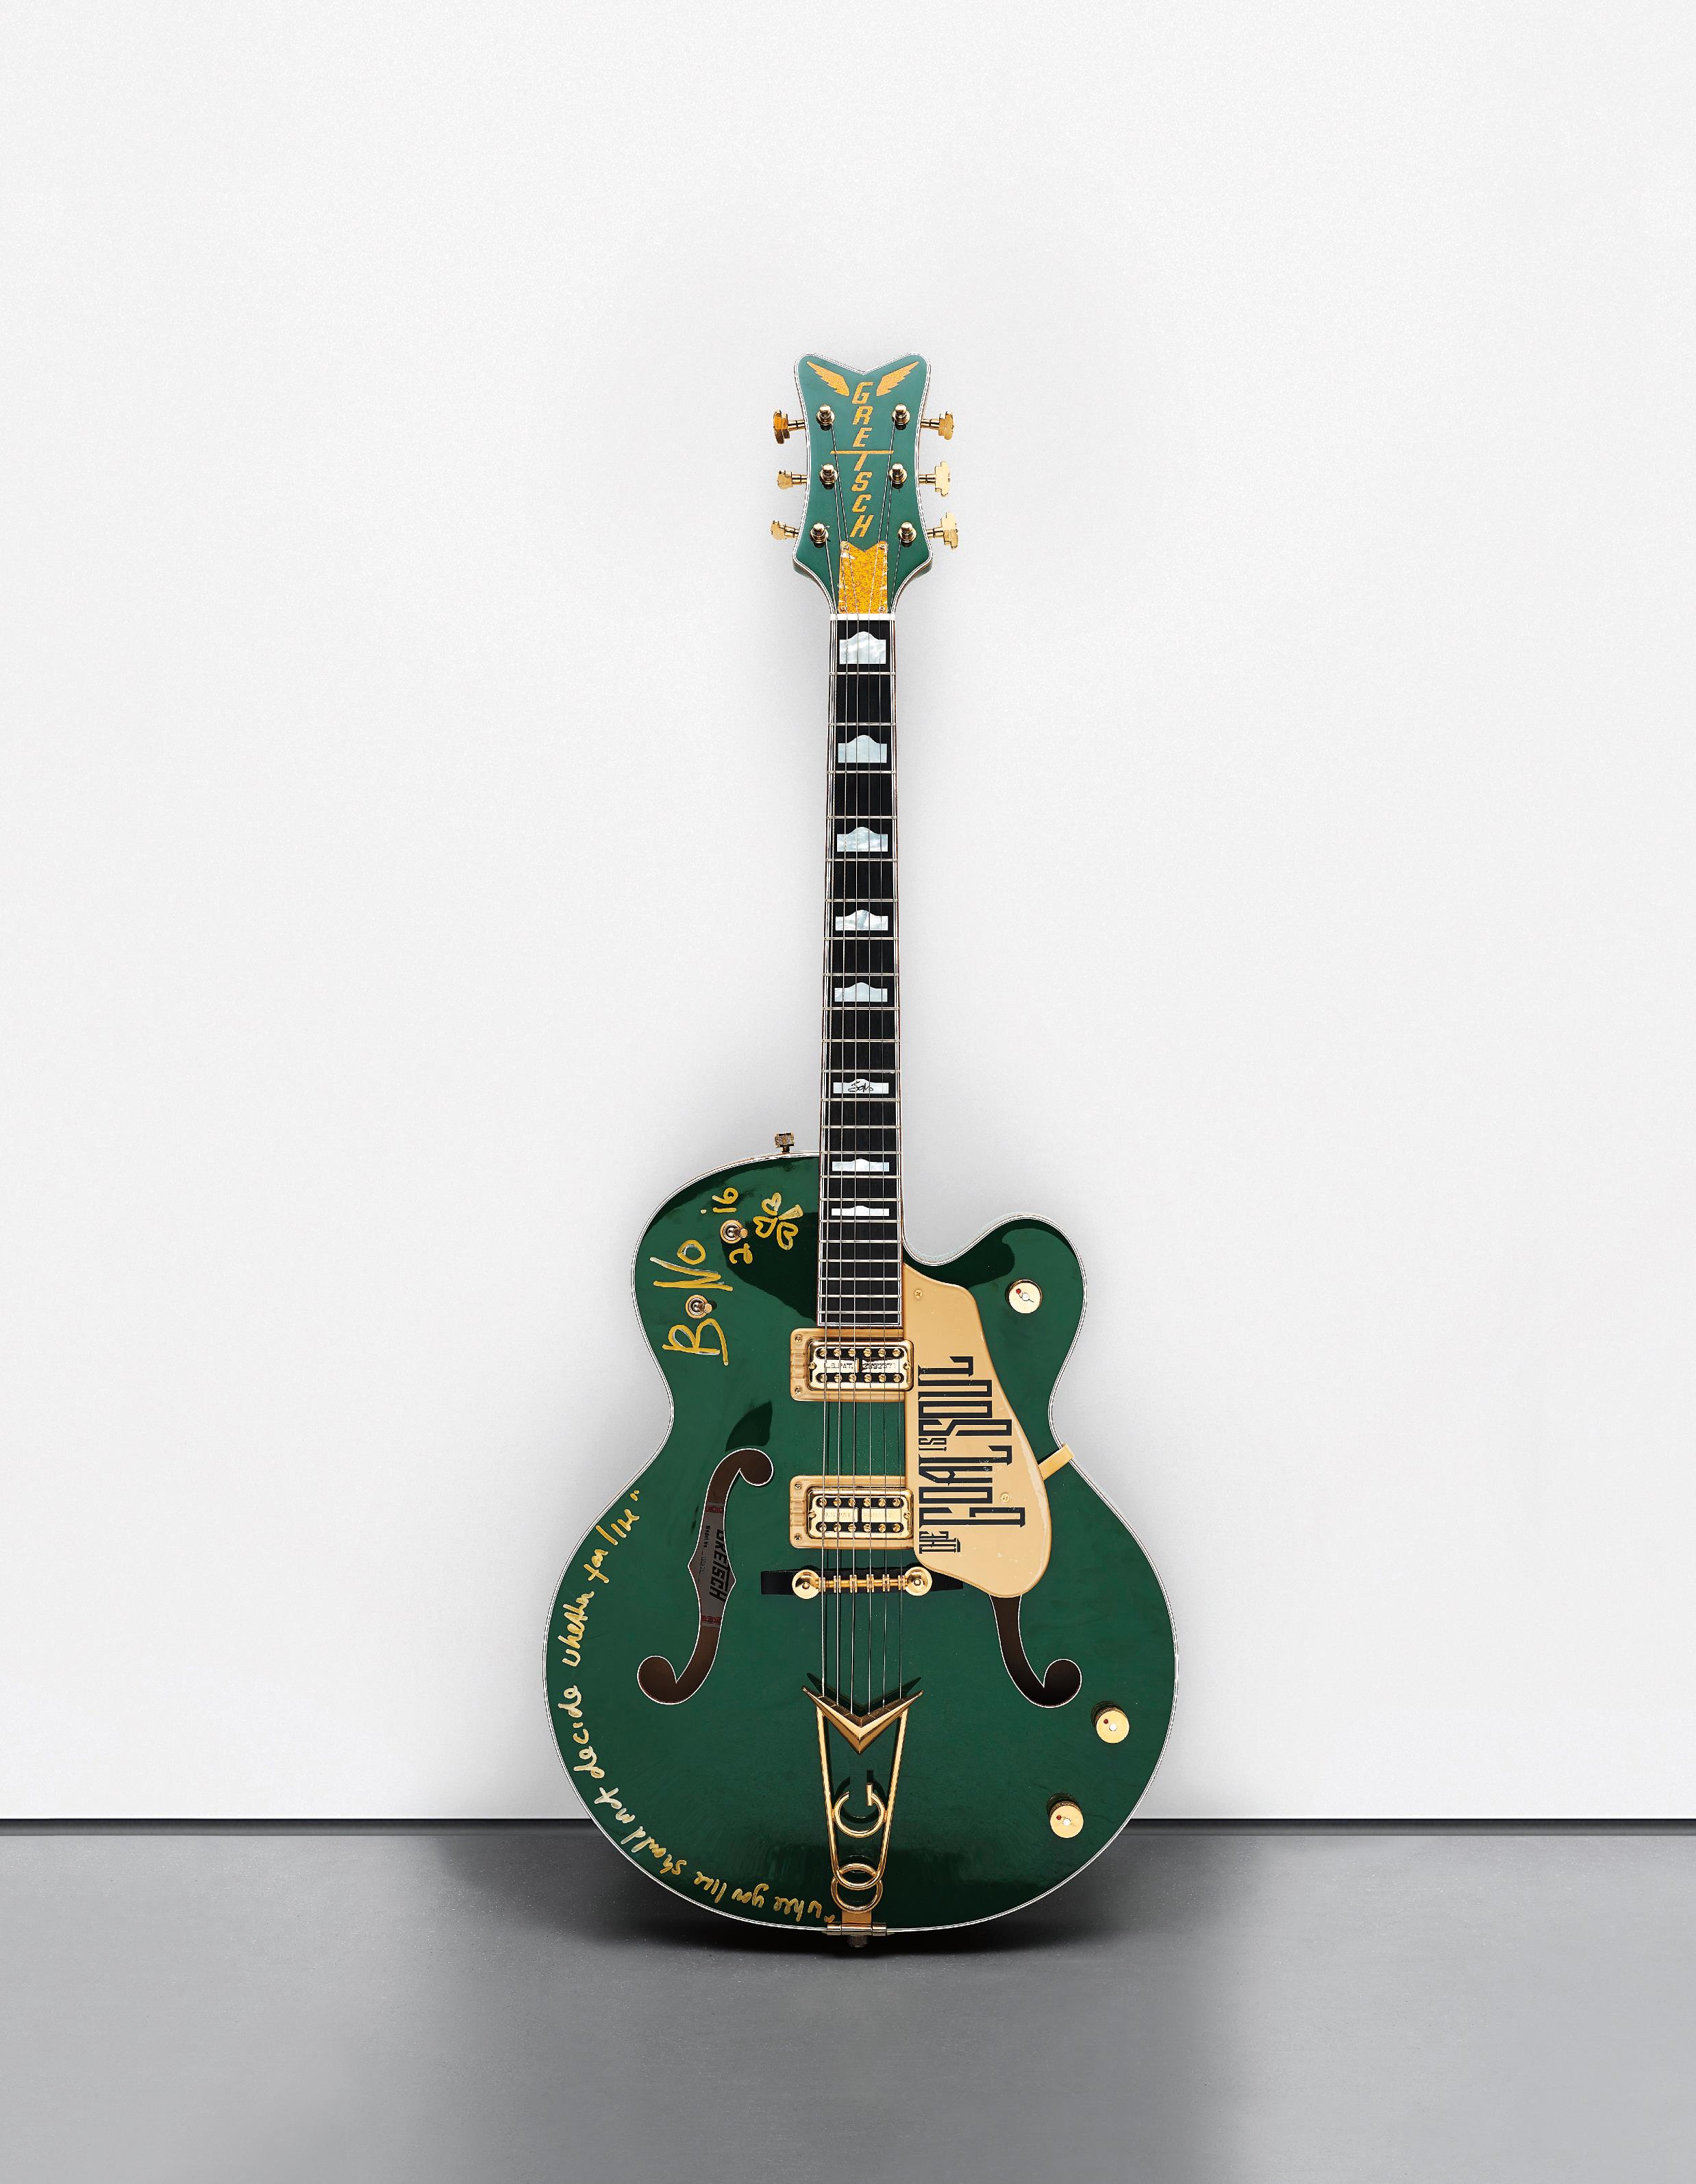 Irish Falcon Gretsch guitar courtesy of Bono